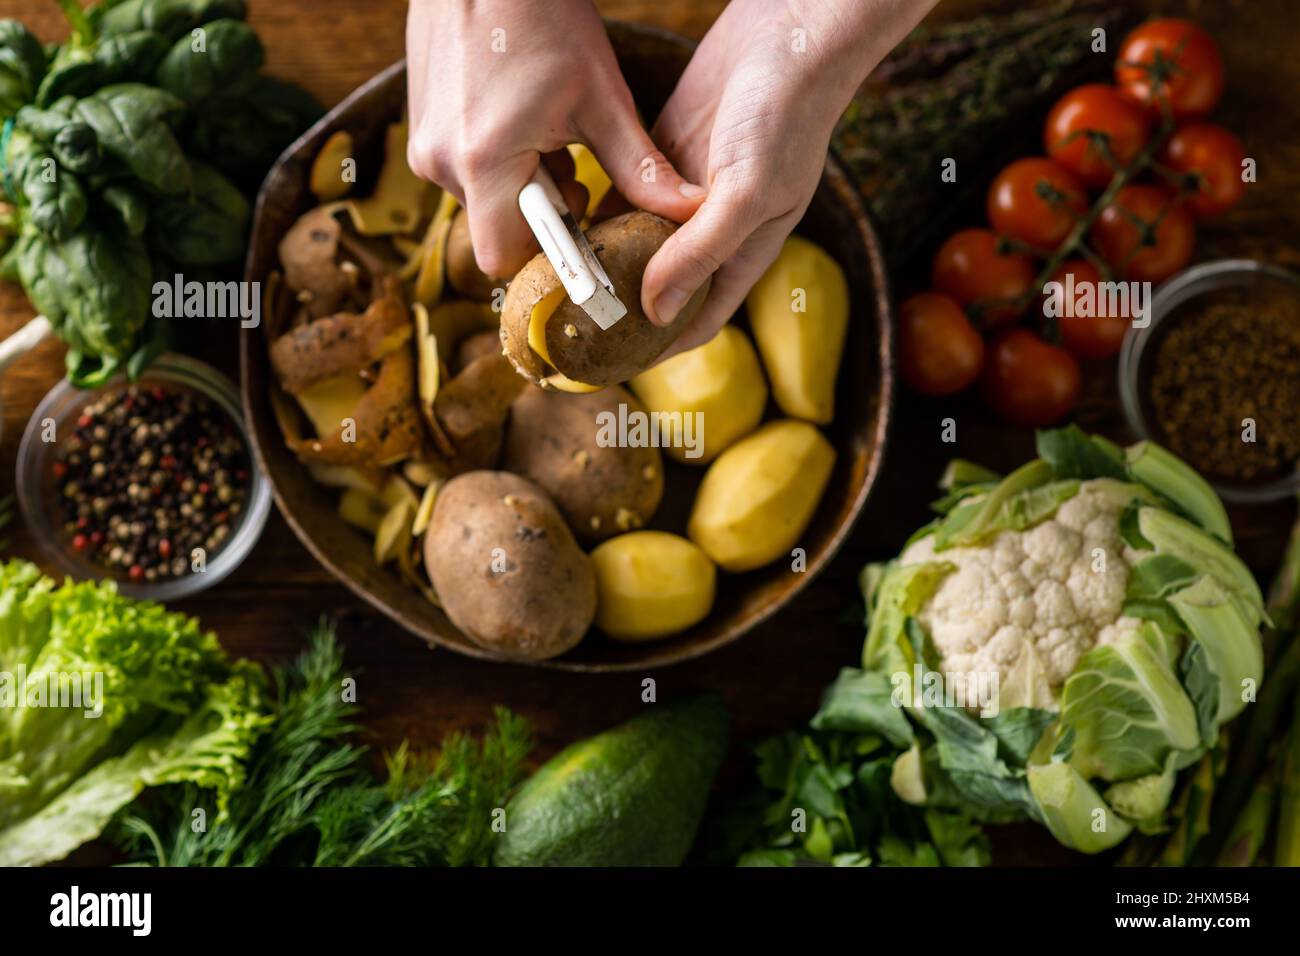 https://c8.alamy.com/comp/2HXM5B4/a-woman-is-peeling-potatoes-various-fresh-vegetables-lie-on-the-table-cooking-vegetarian-food-2HXM5B4.jpg